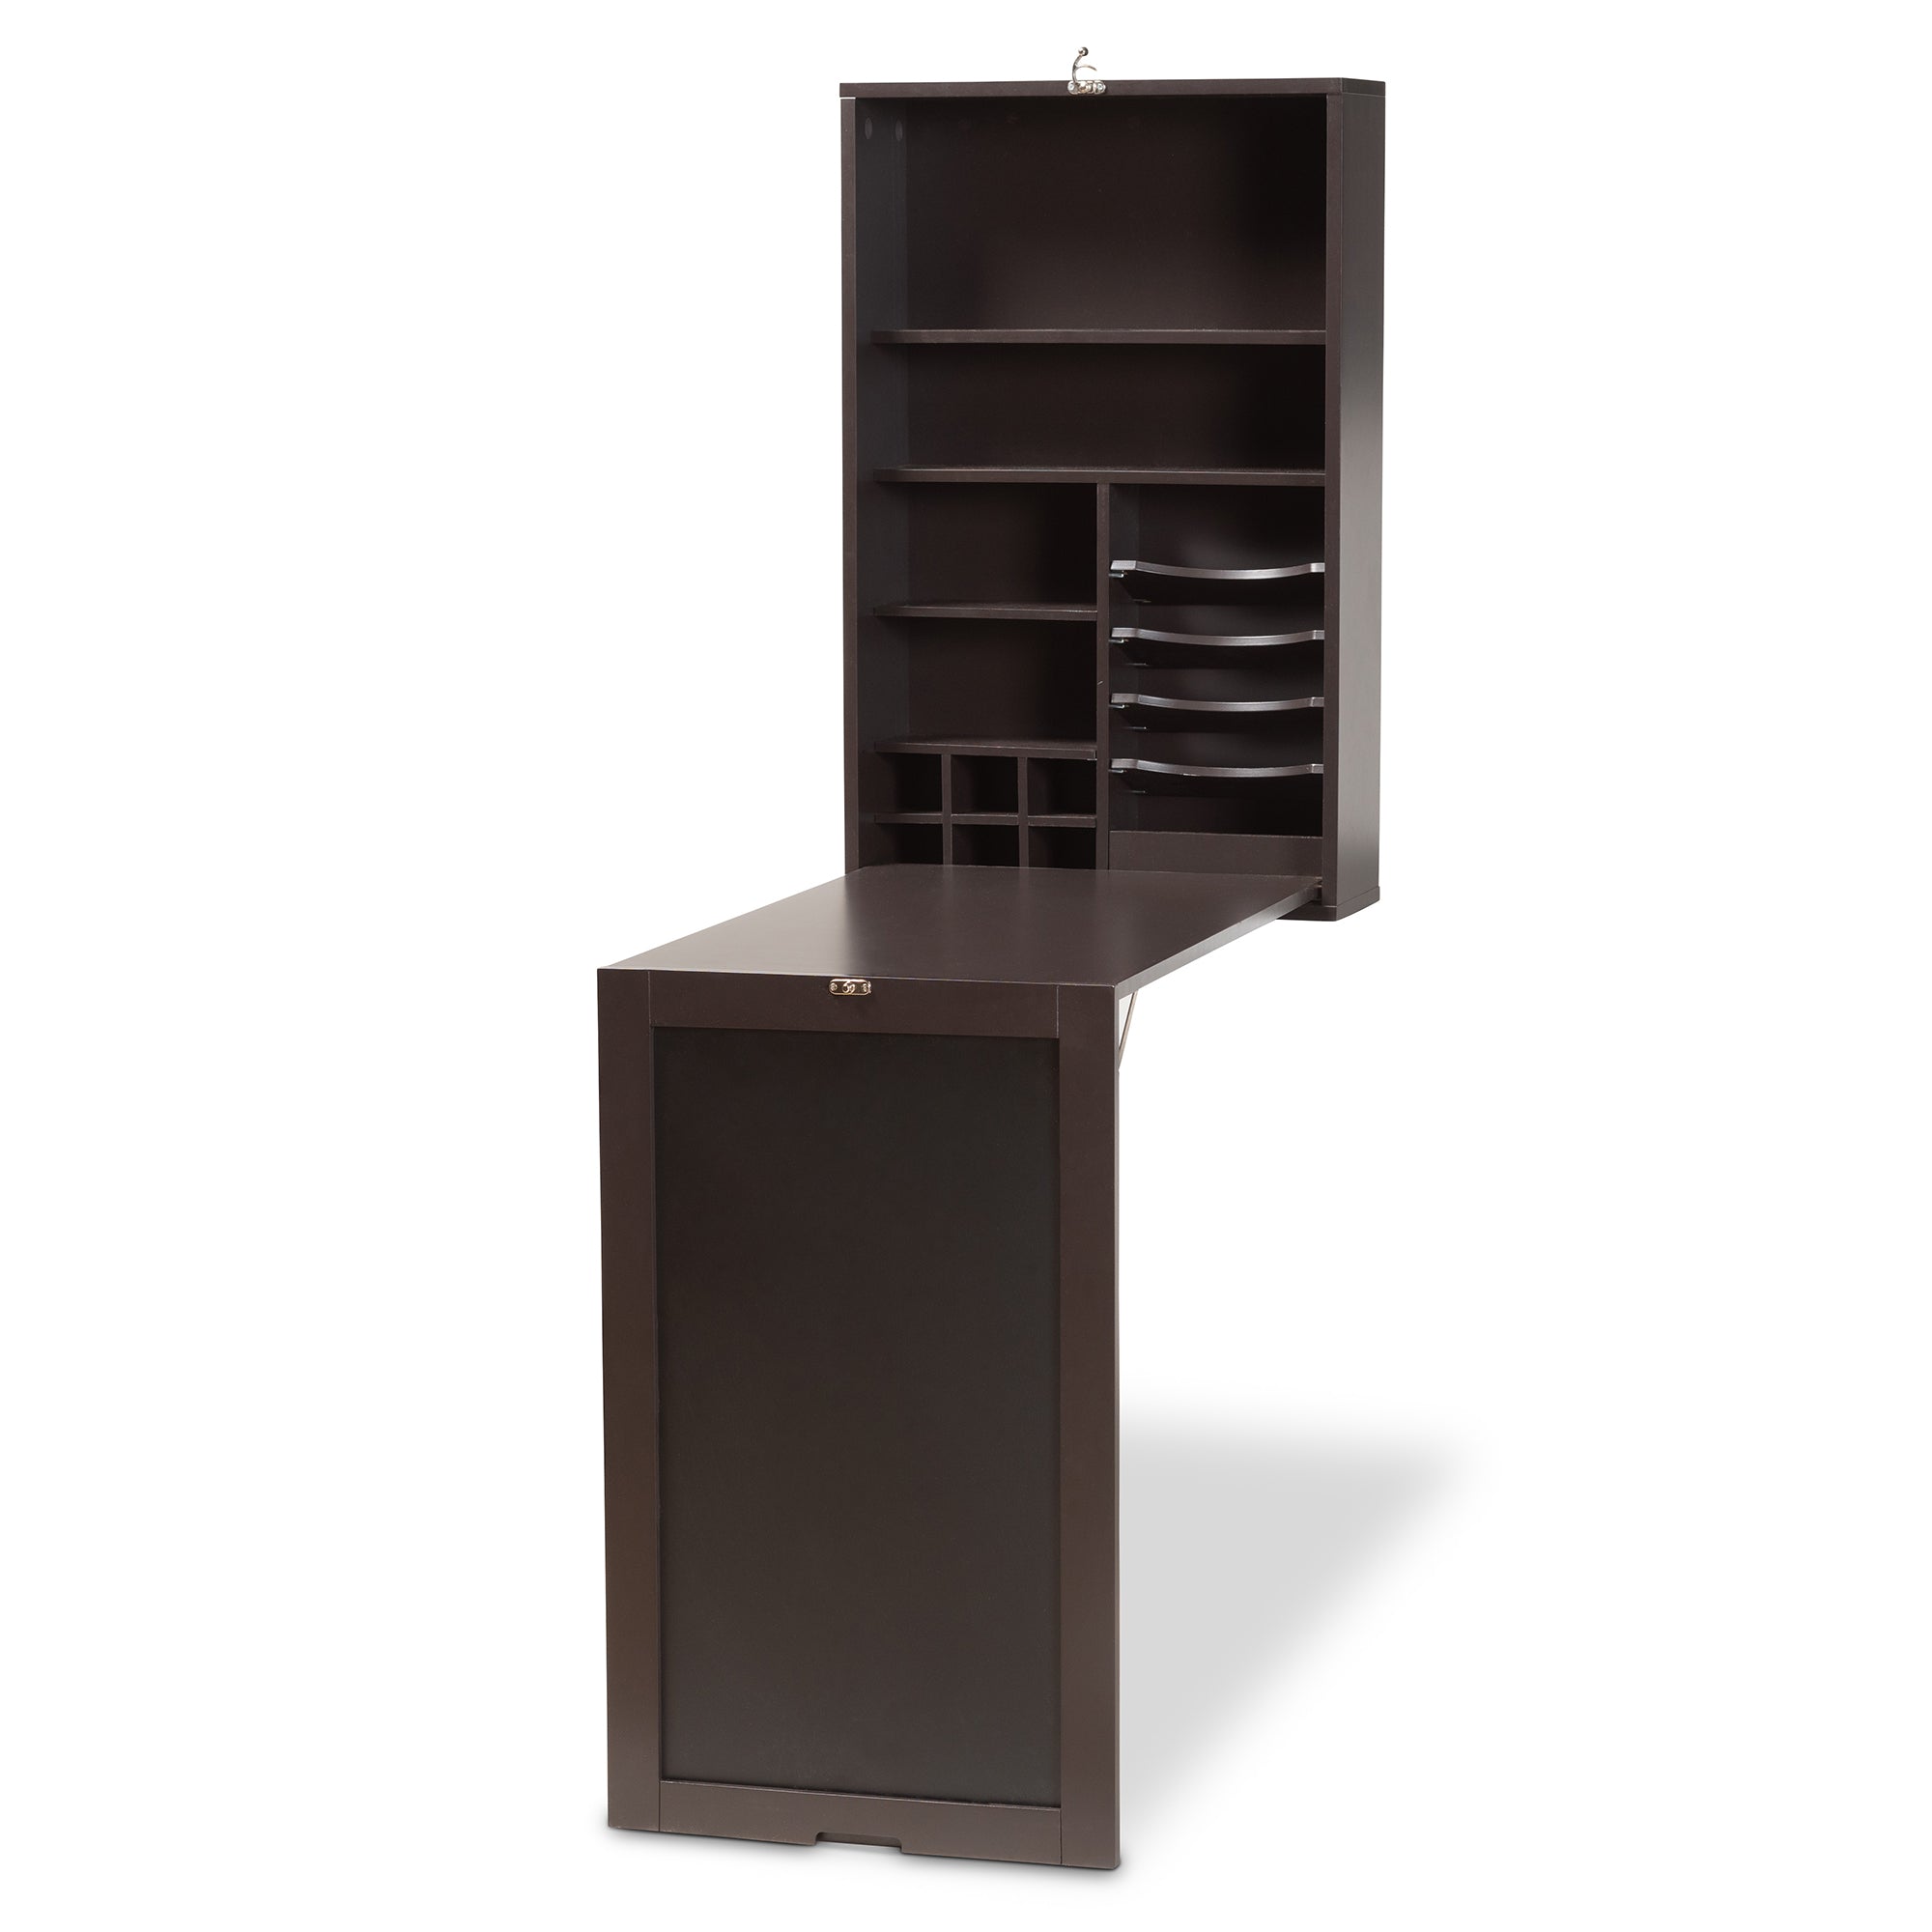 Millard Modern Desk Wall-Mounted-Desk-Baxton Studio - WI-Wall2Wall Furnishings